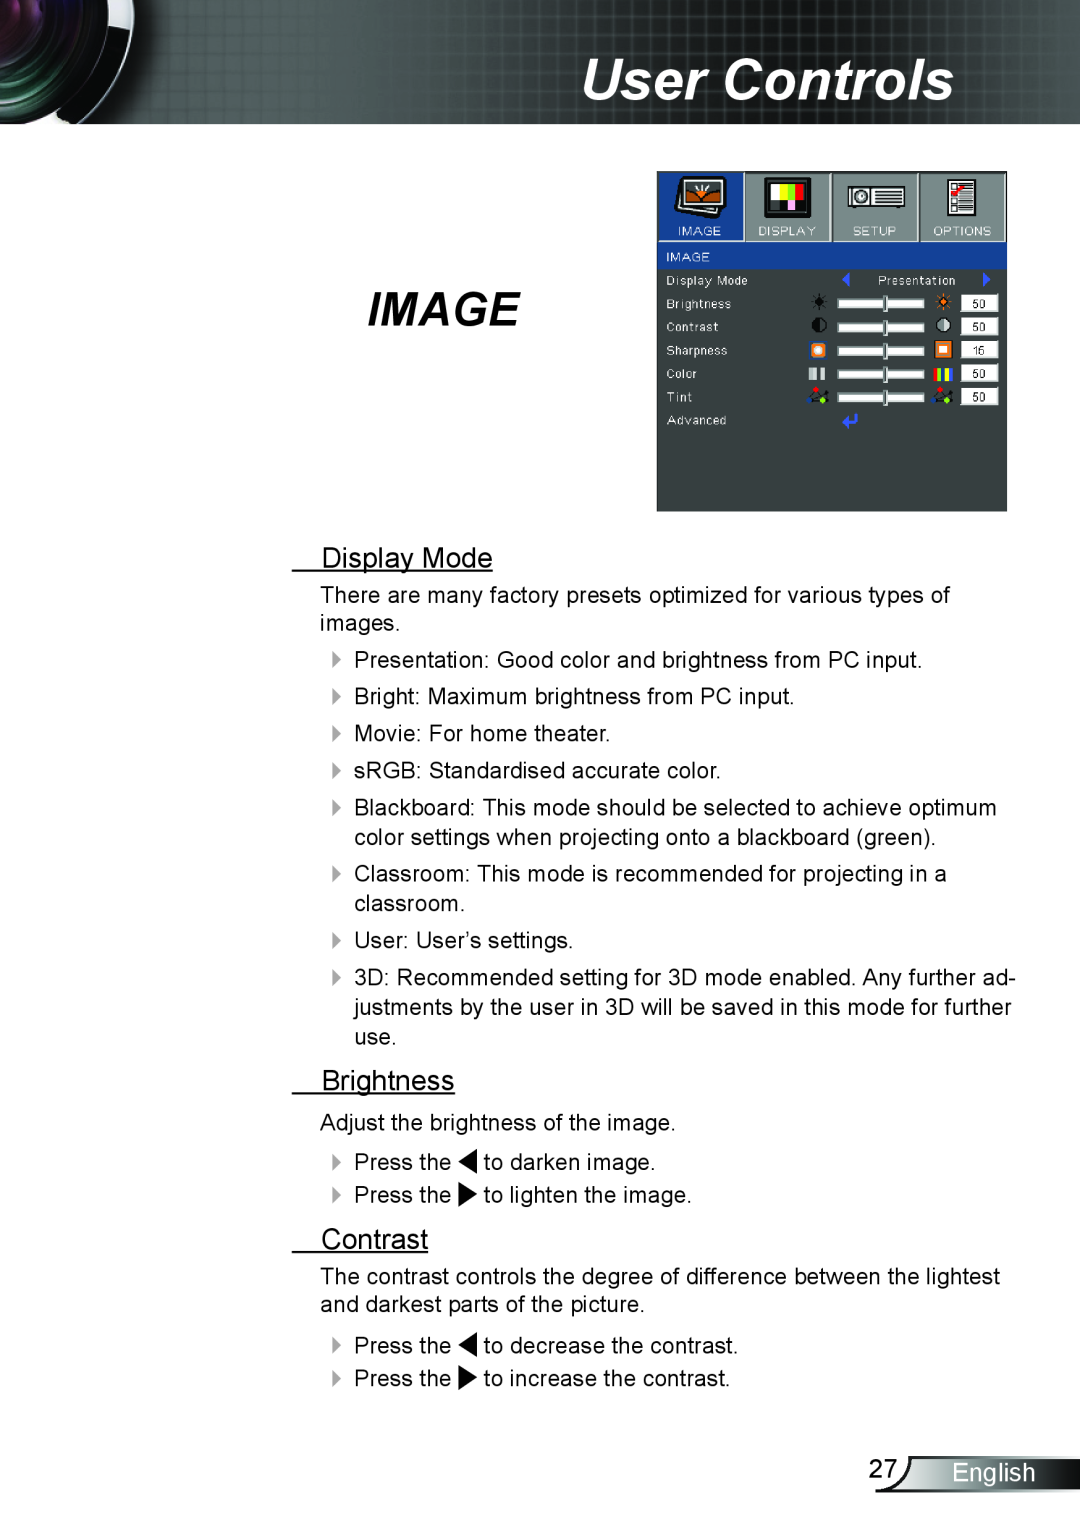 Optoma Technology TW6153D, TW615GOV manual Image, Display Mode, Brightness, Contrast, English, User Controls 